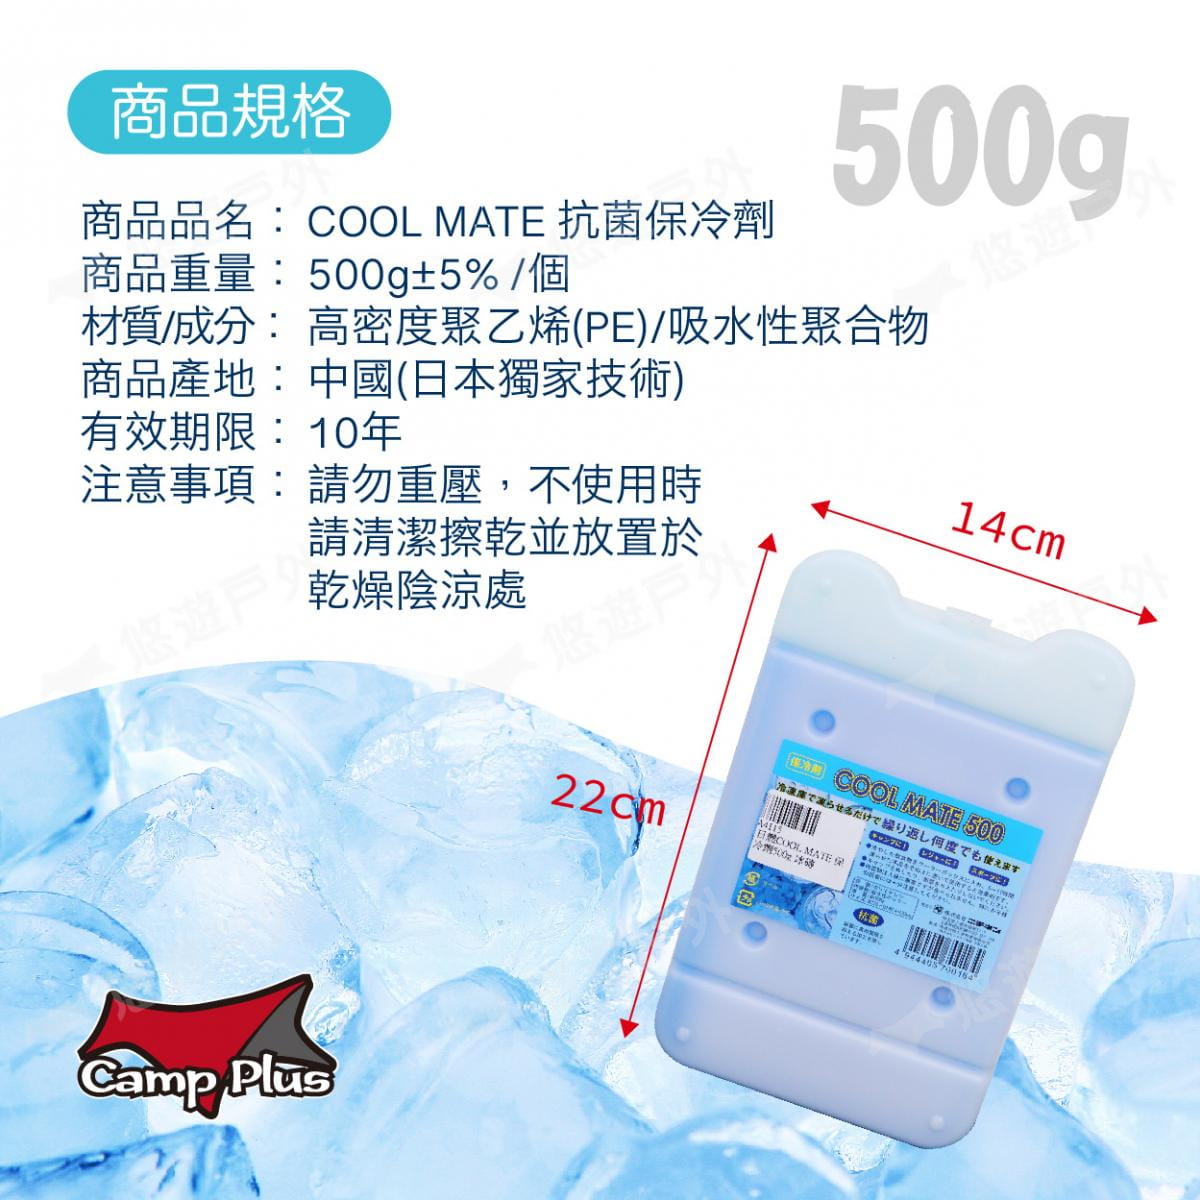 【Camp Plus】COOL MATE 抗菌保冷劑 500g (悠遊戶外) 4